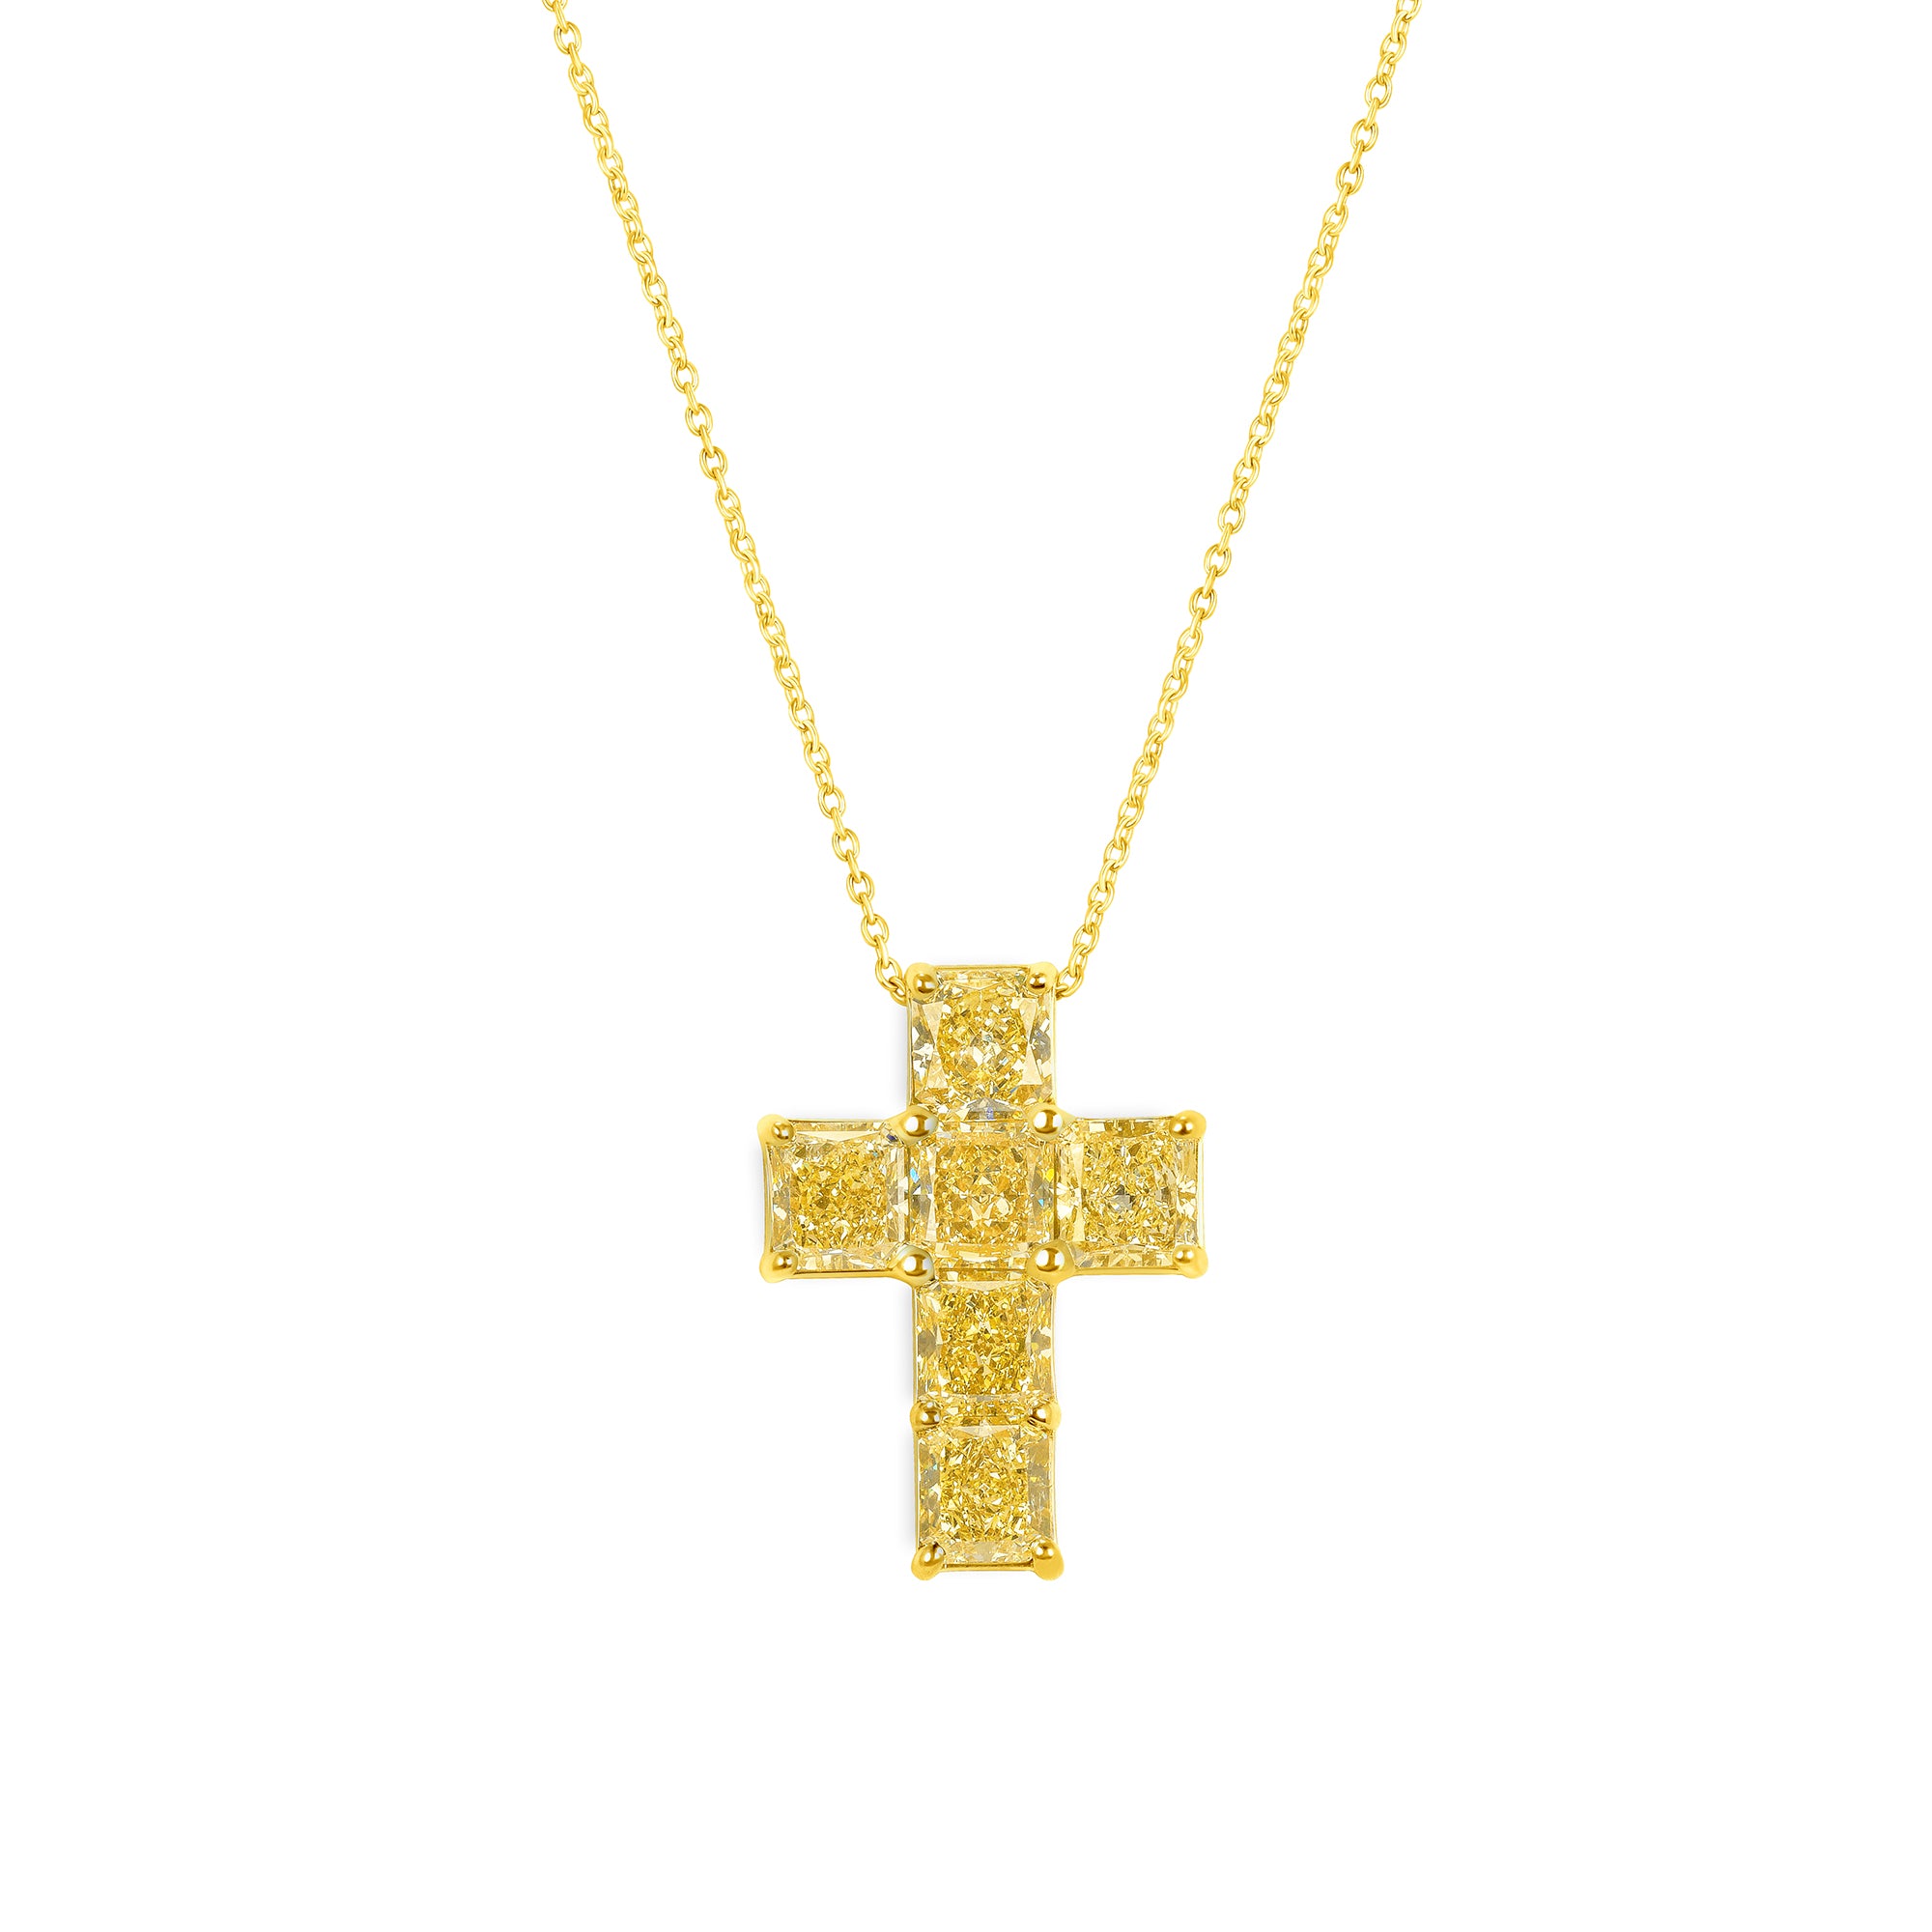 Cushion Cut Fancy Yellow Diamond Cross Necklace in 18 Karat Yellow Gold